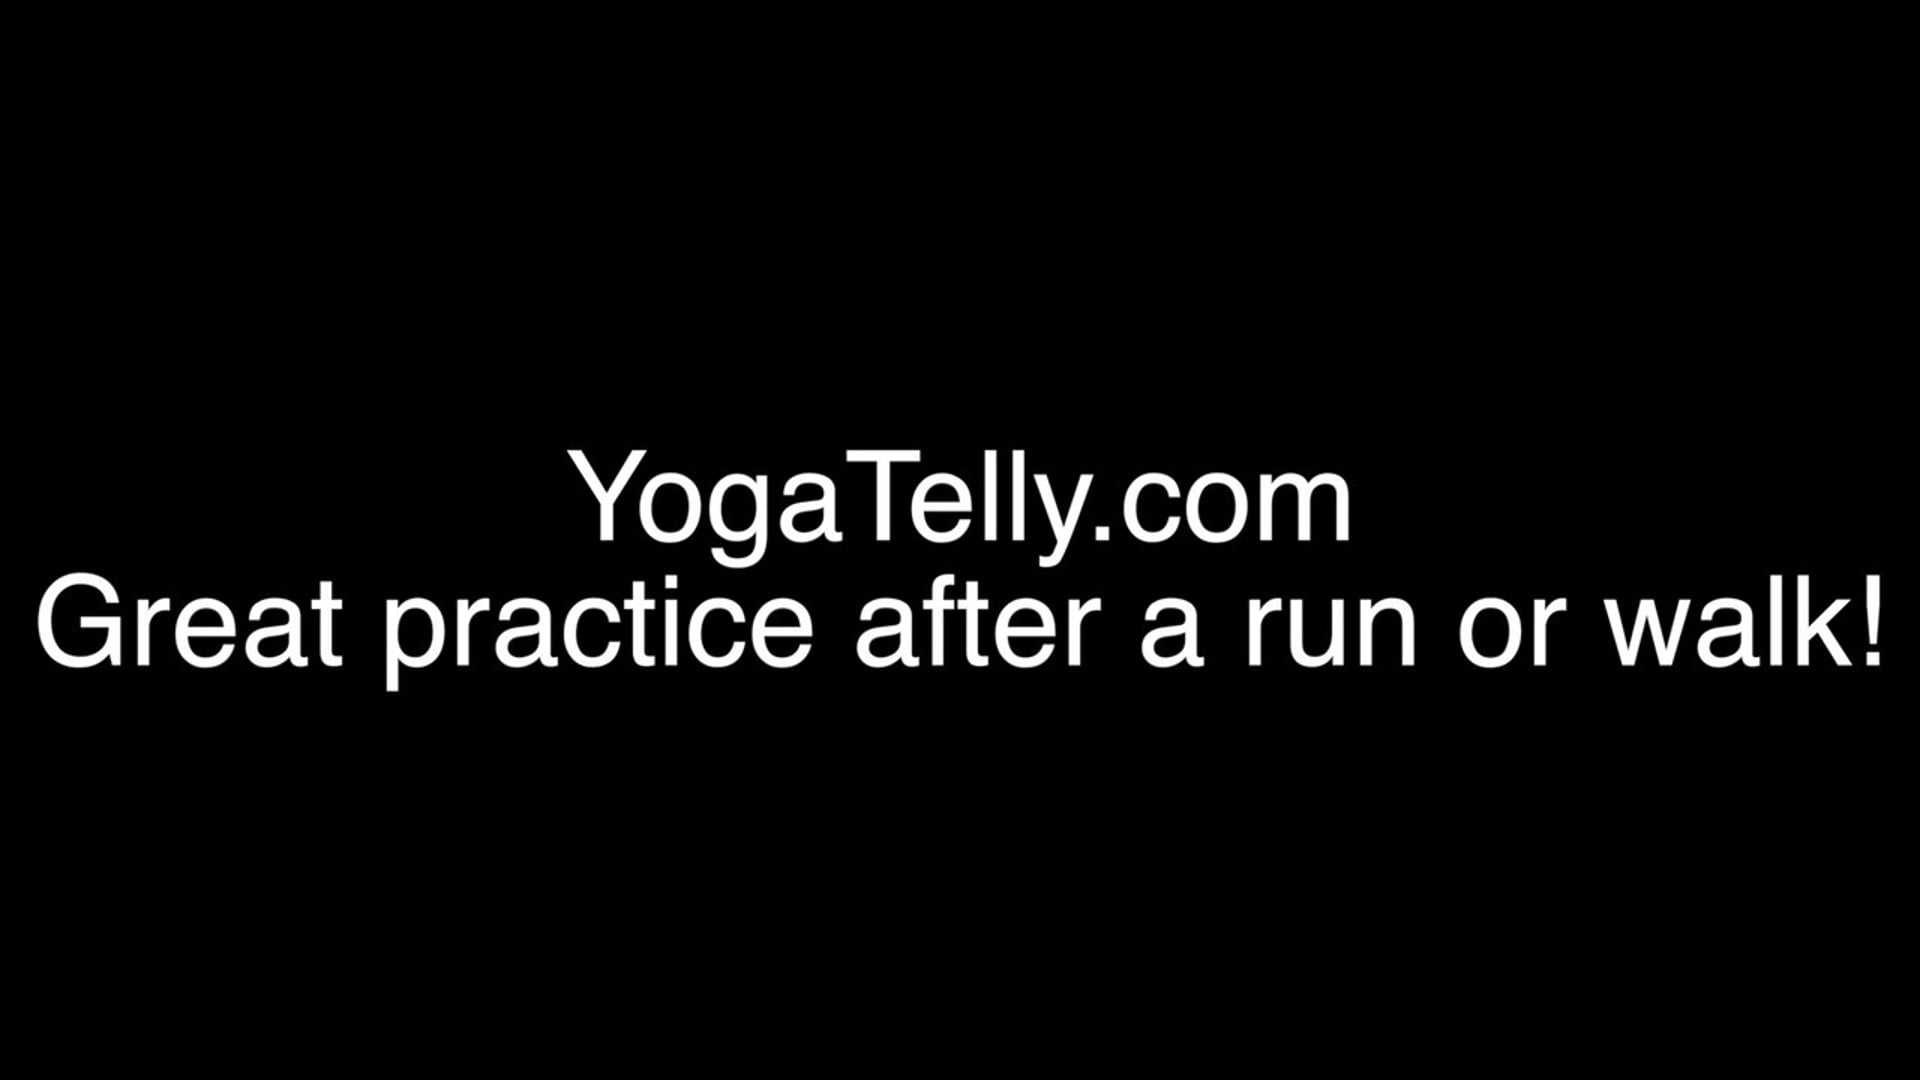 Pilates & Yoga